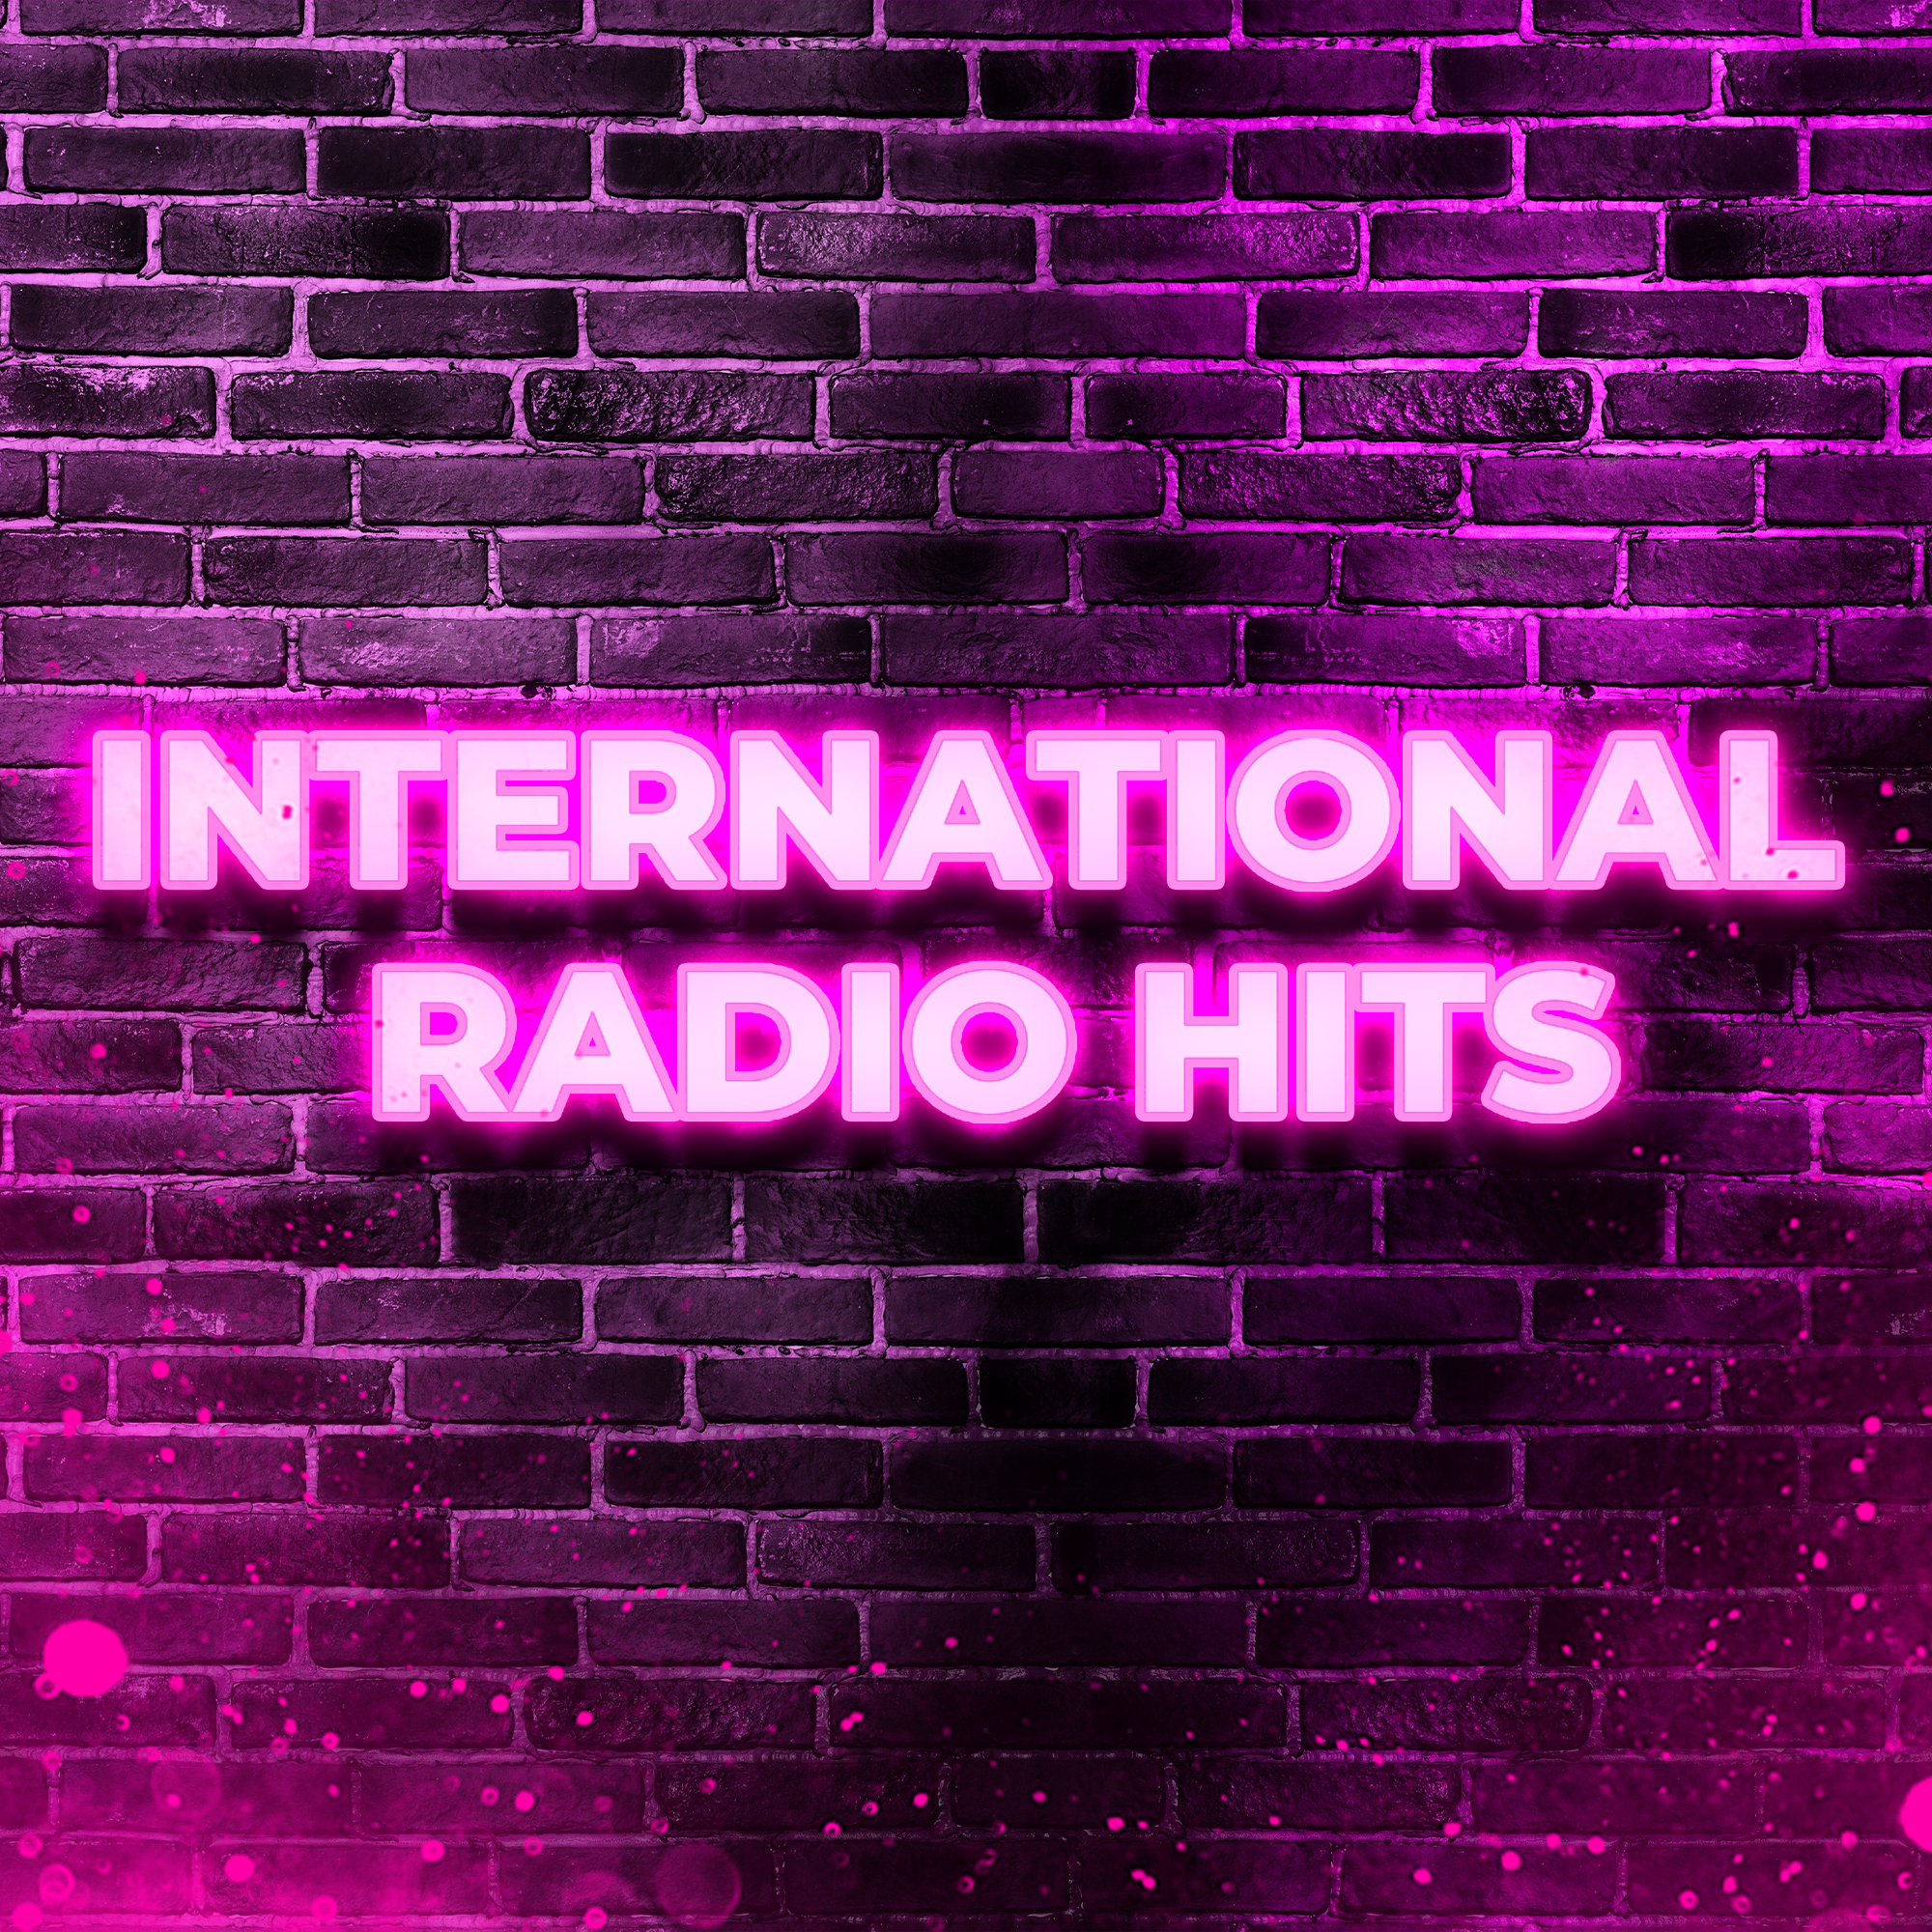 INTERNATIONAL RADIO HITS